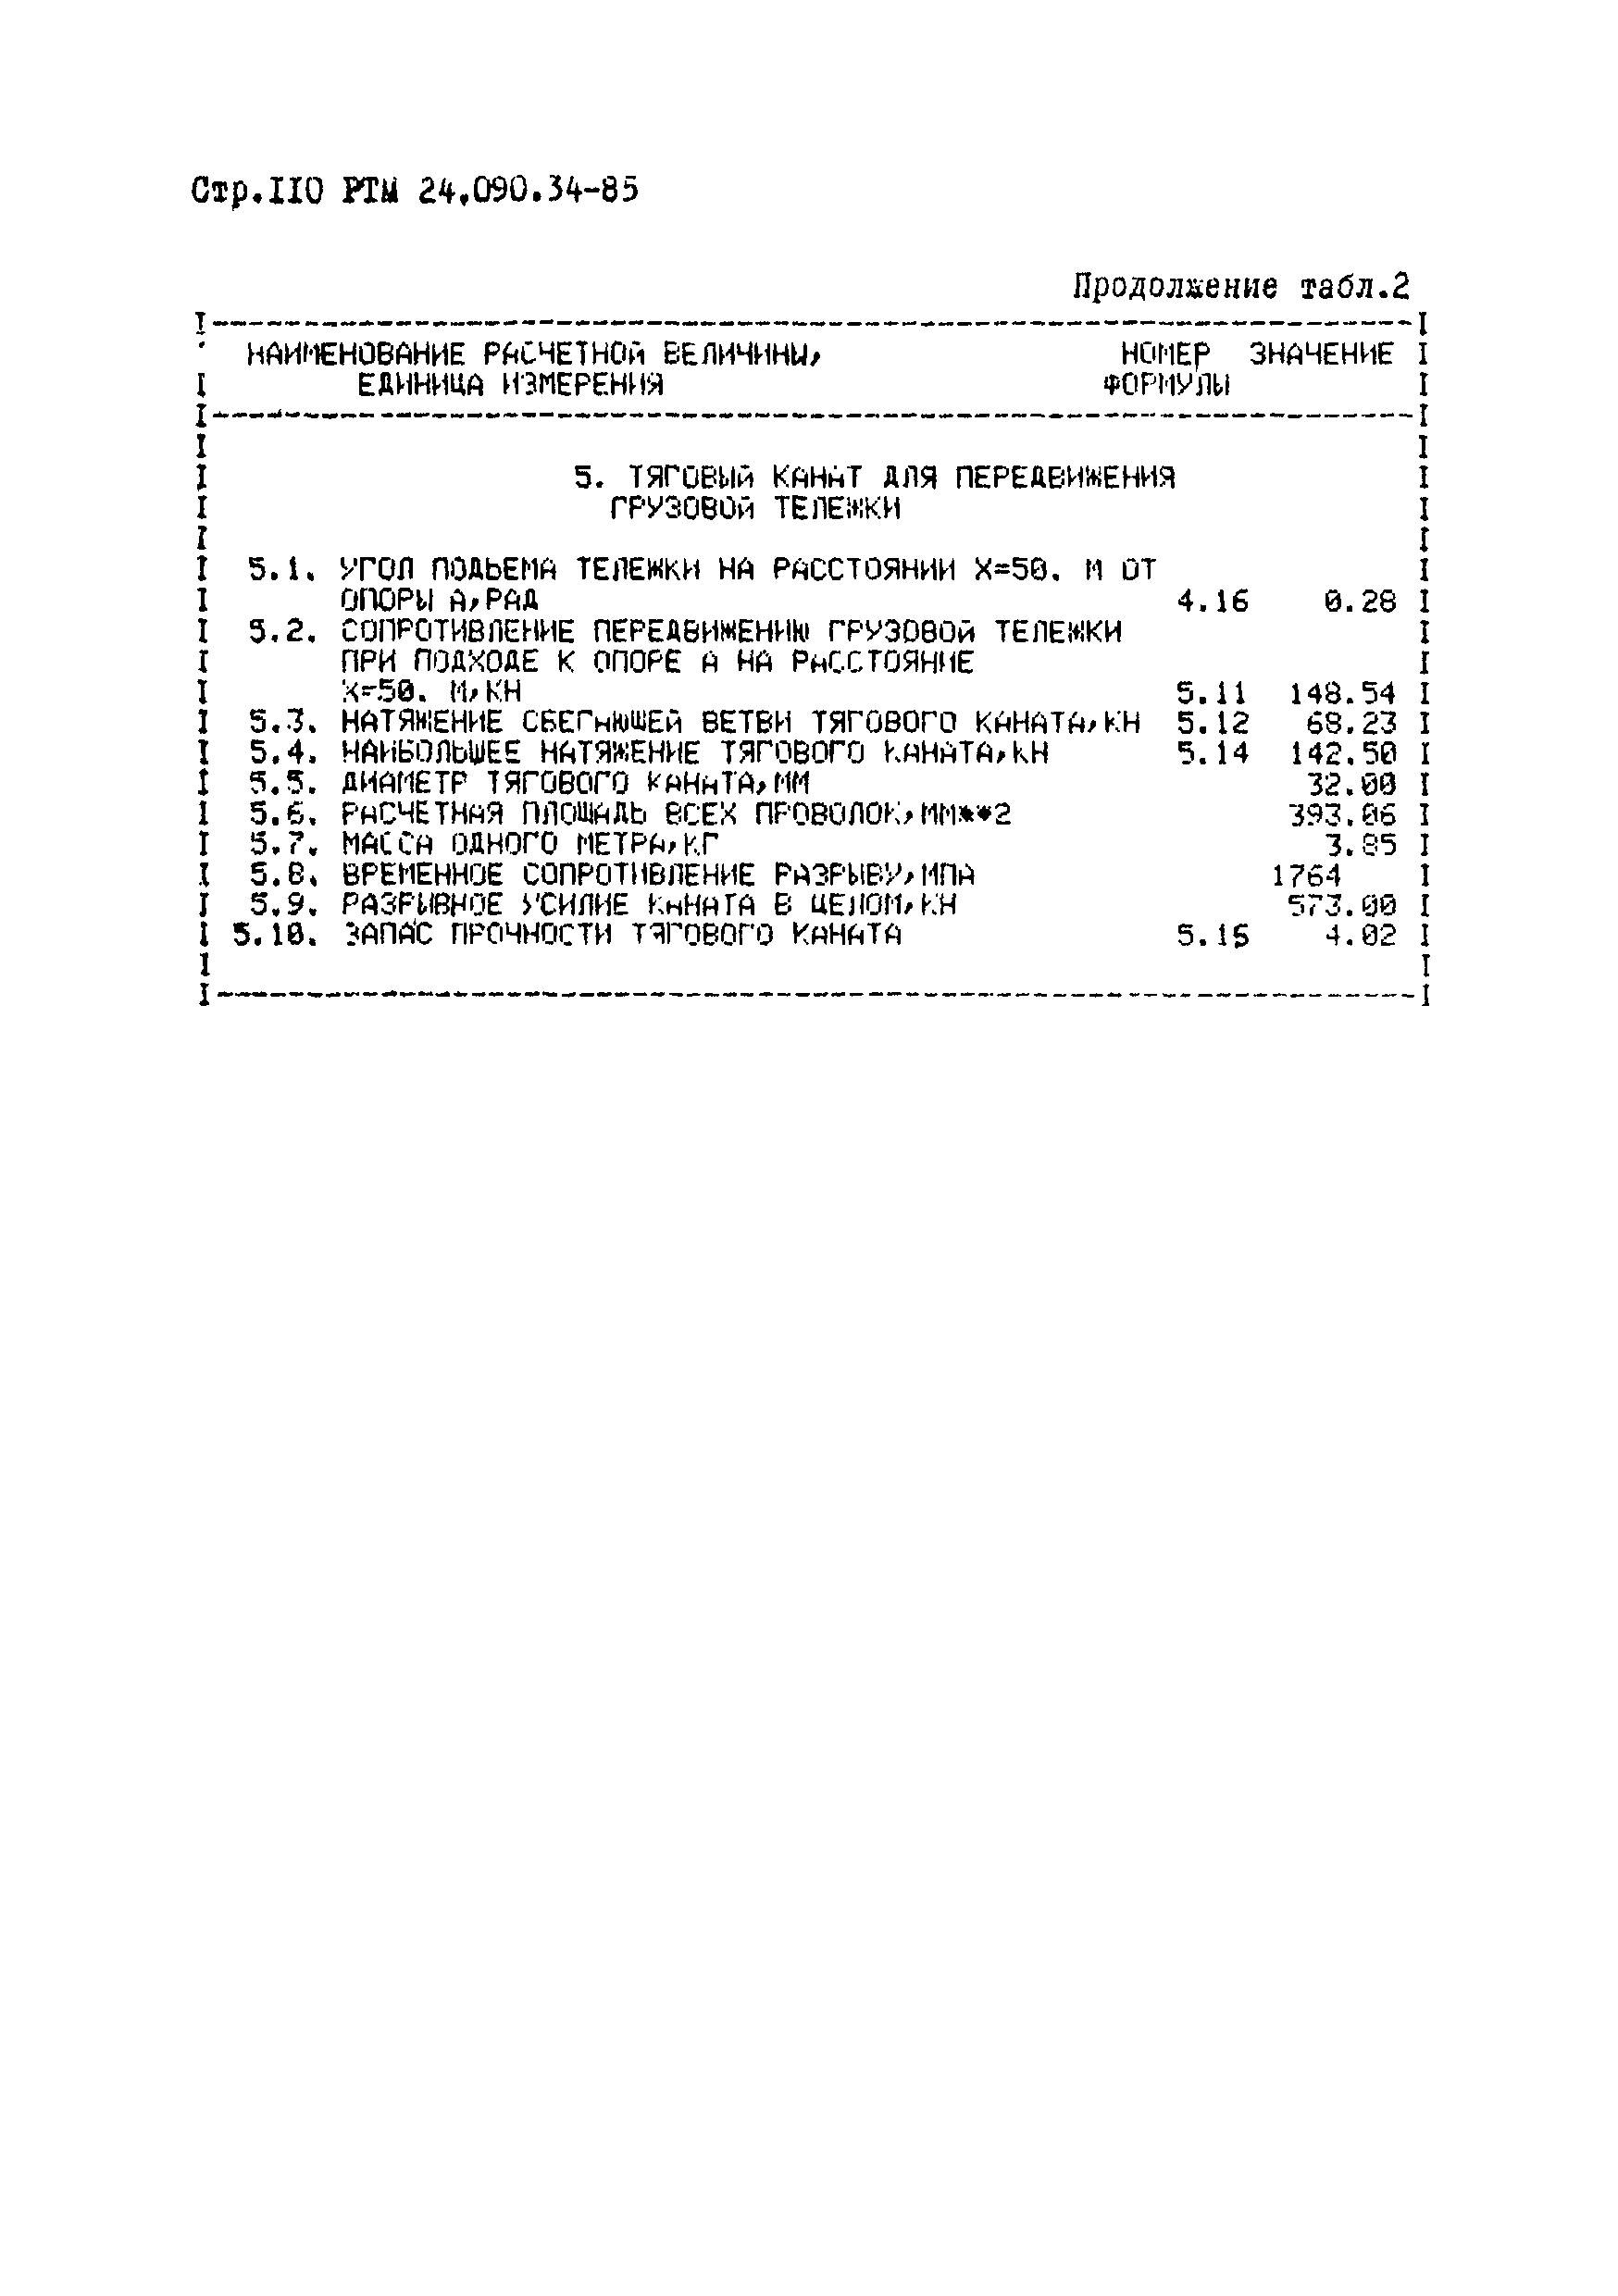 РТМ 24.090.34-85